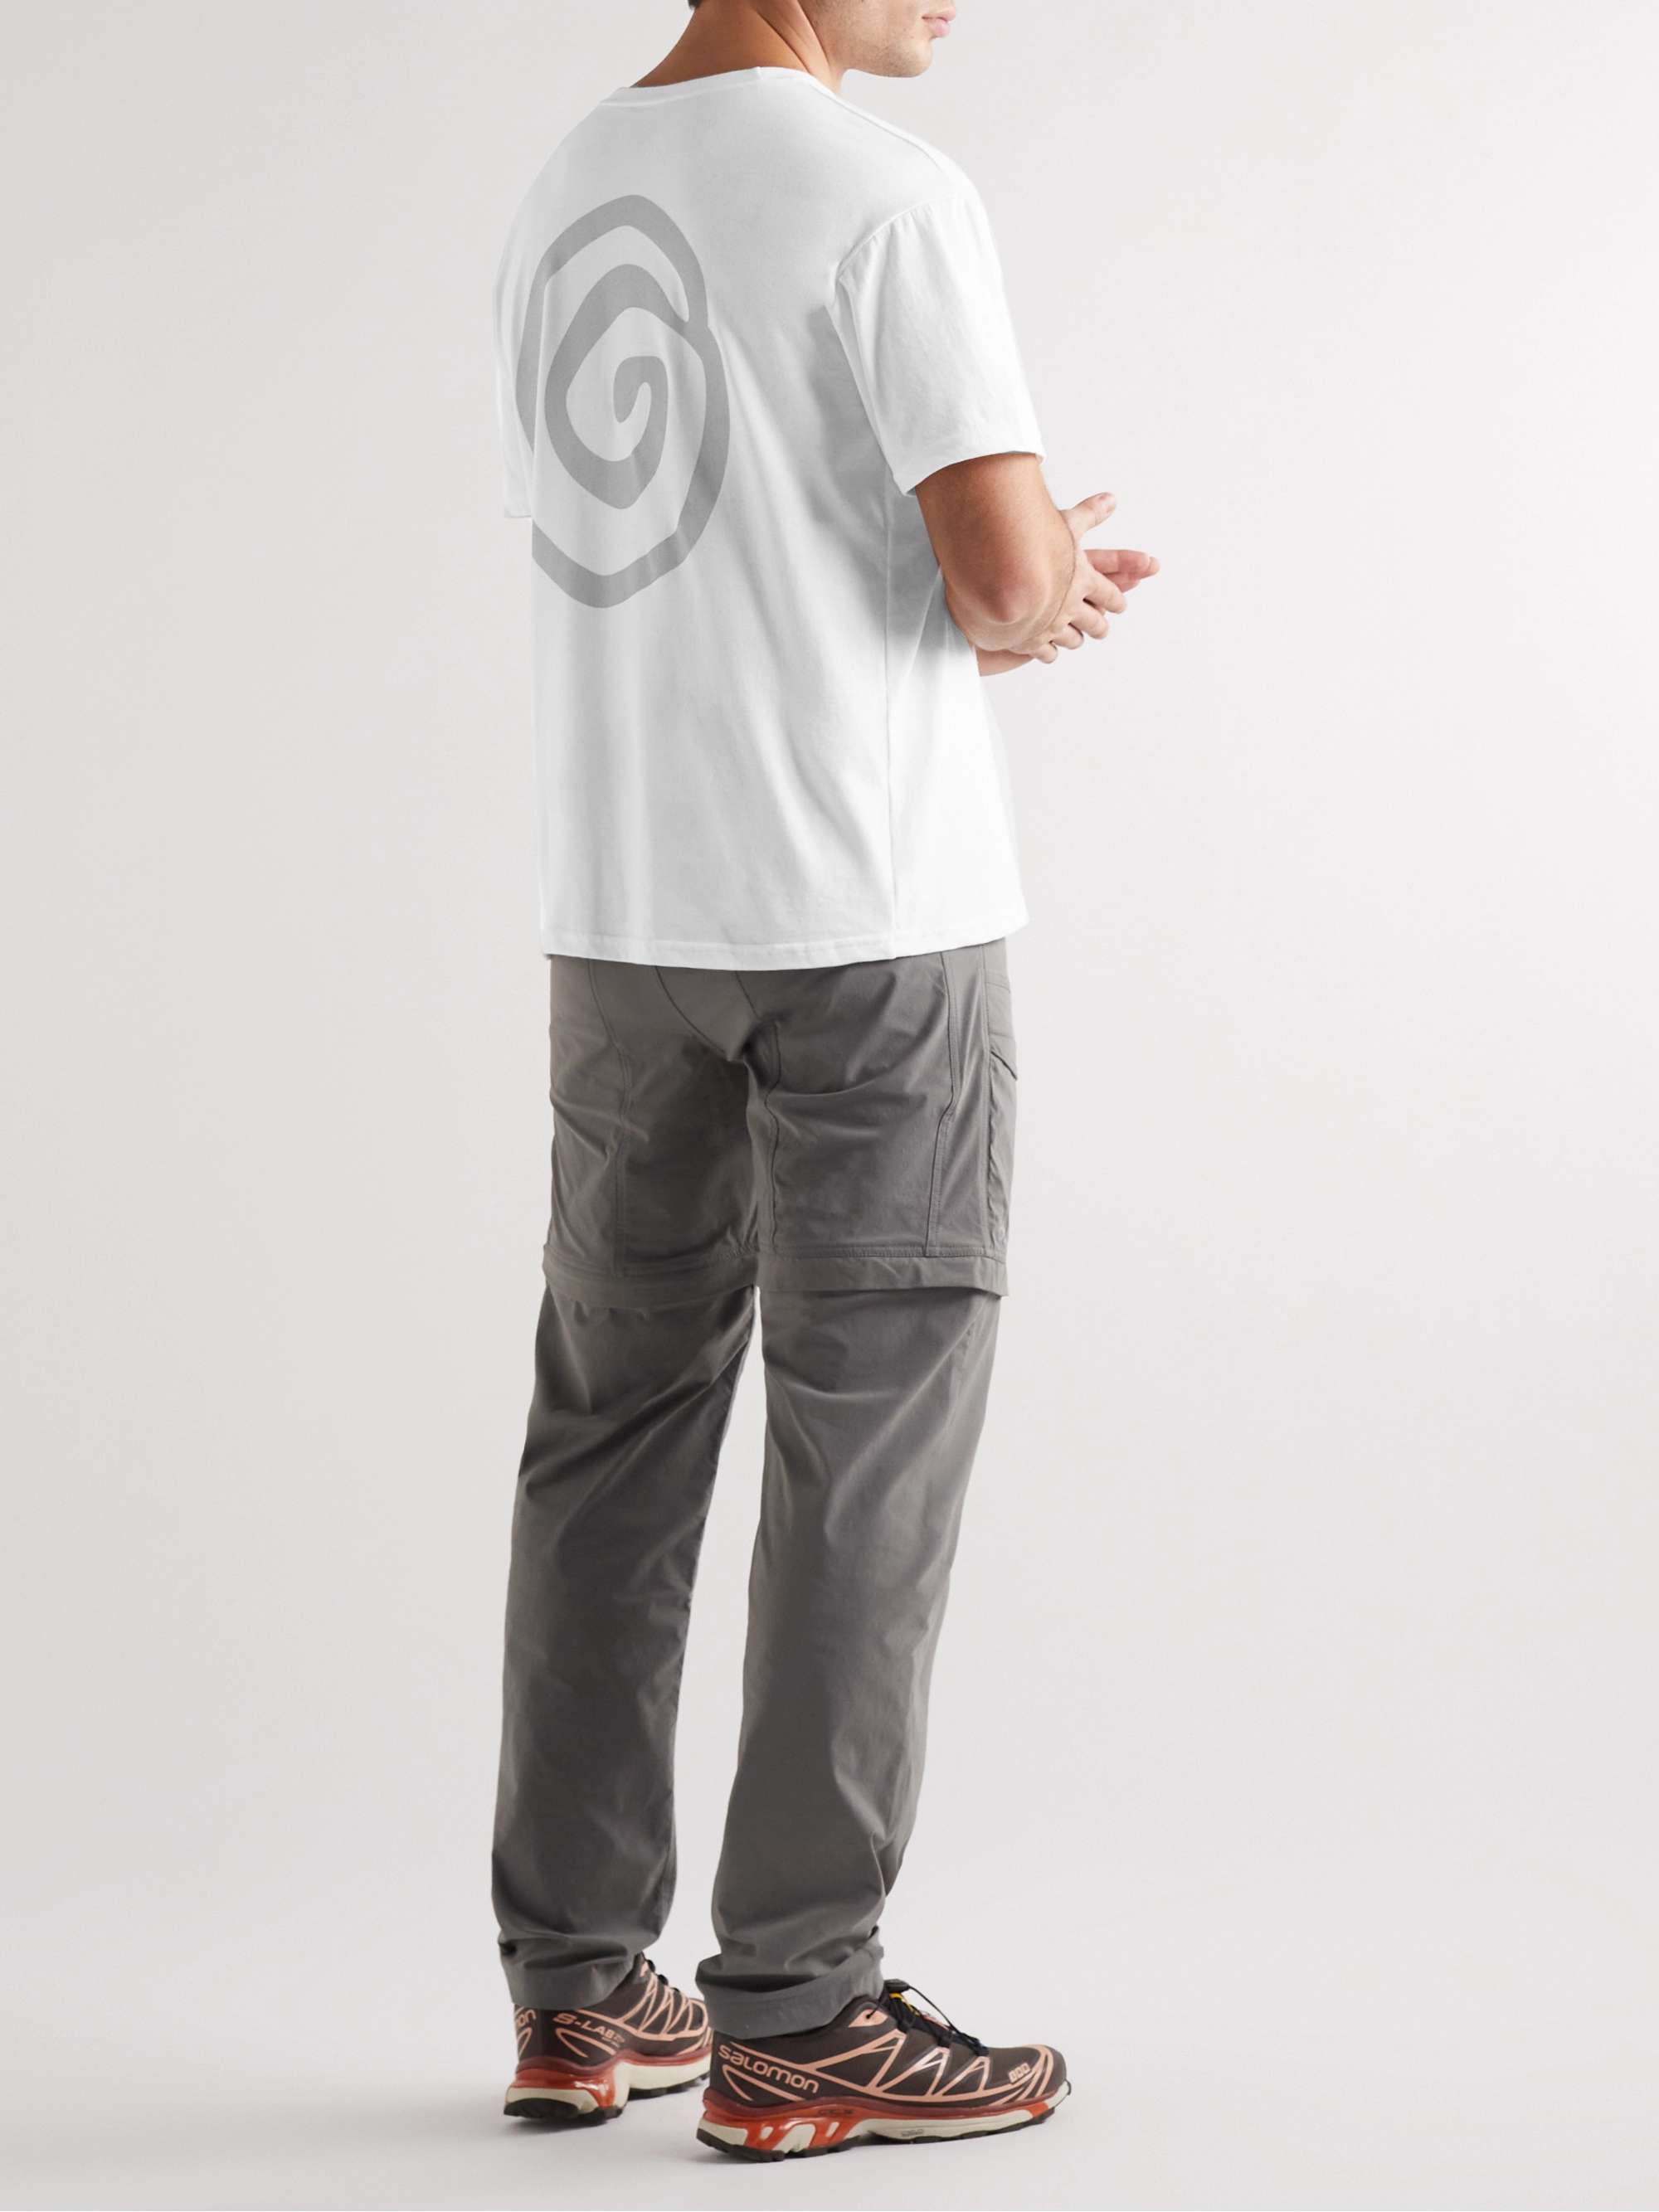 OSTRYA Core Equi-Tee Logo-Print Cotton-Blend Jersey T-Shirt